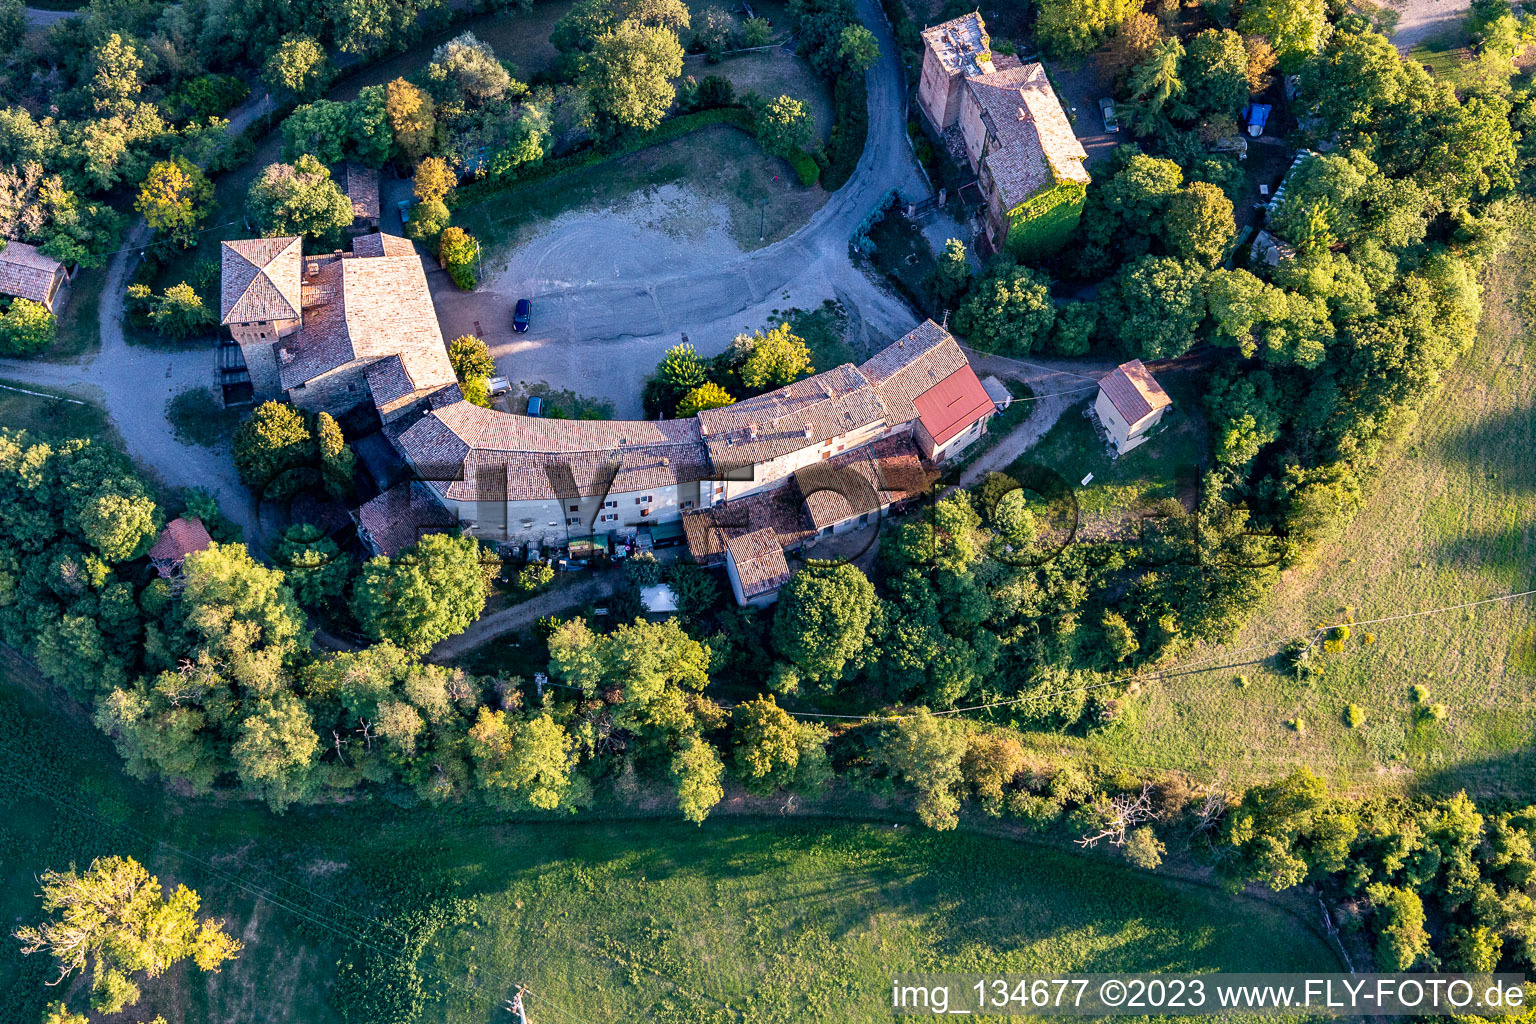 Aerial view of Castle of Casalgrande in Casalgrande in the state Reggio Emilia, Italy